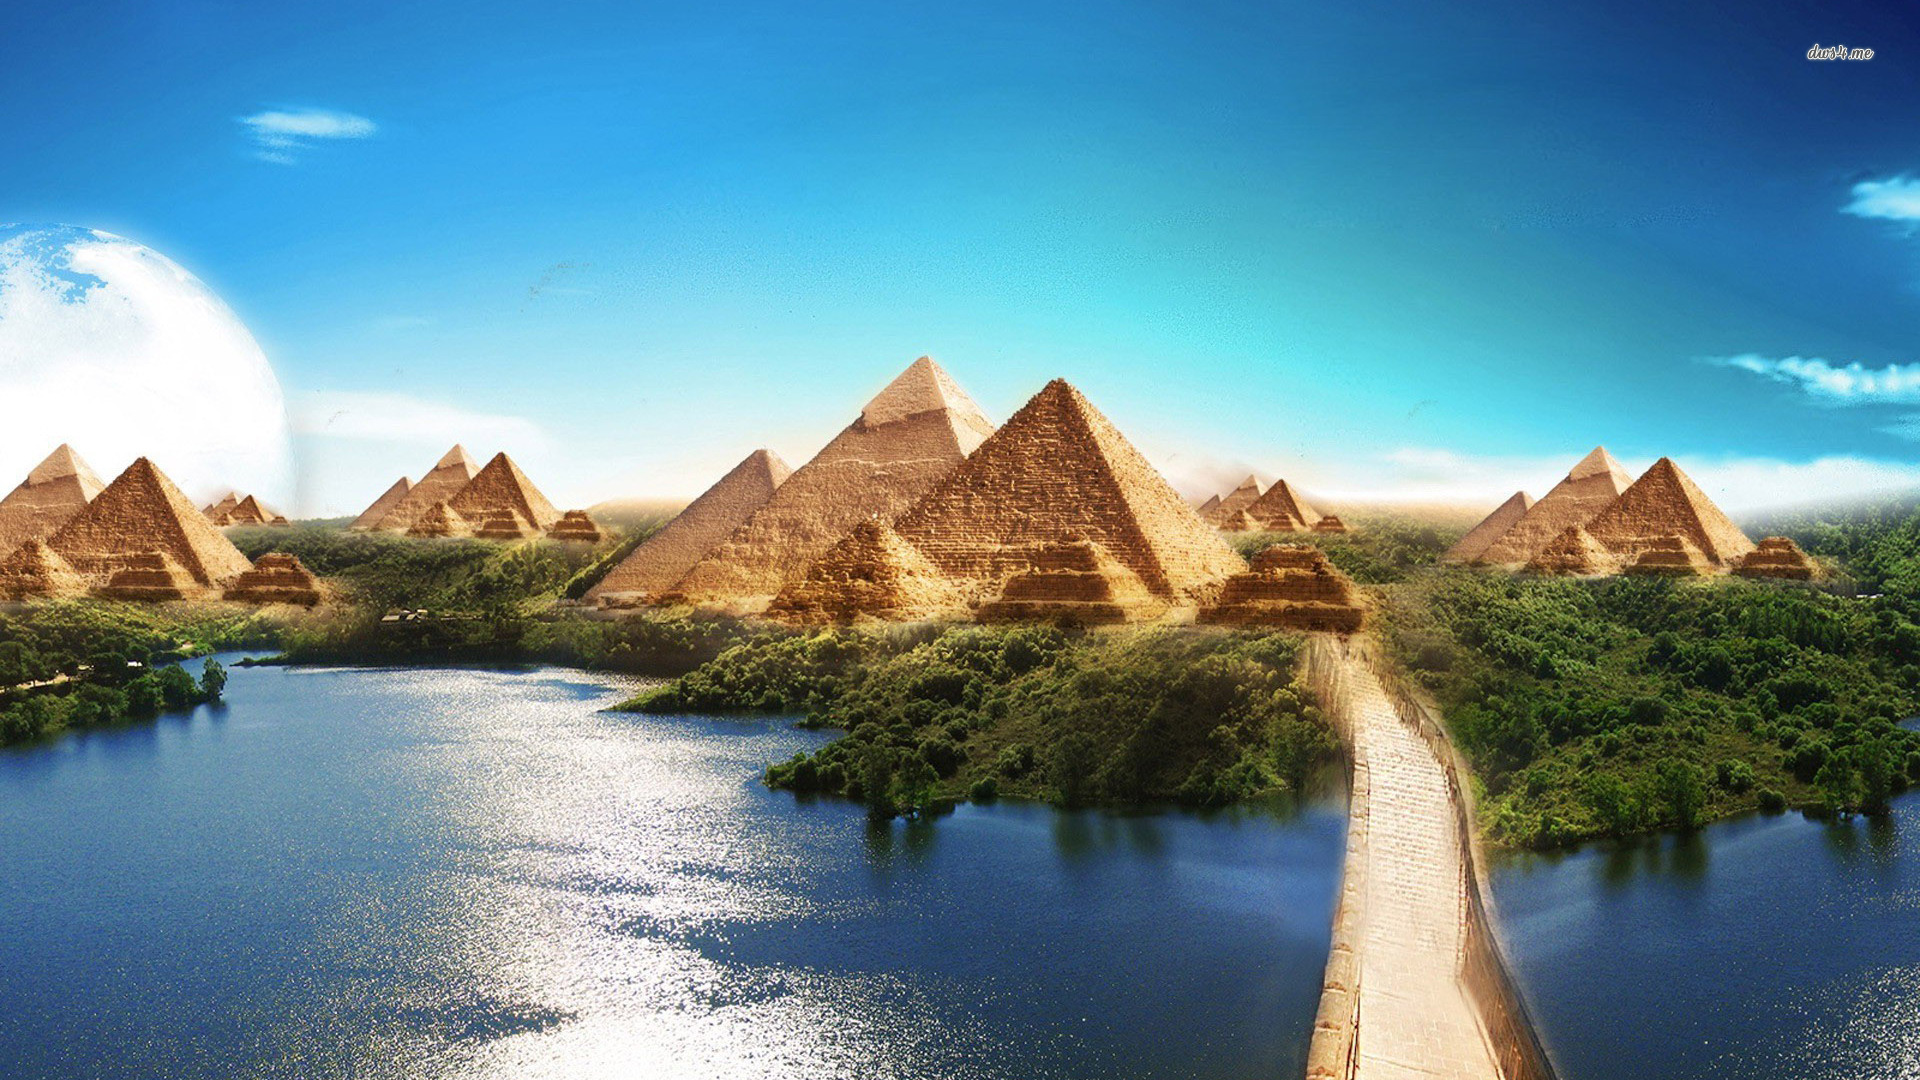 Pyramids Wallpaper Wallpapersafari HD Wallpapers Download Free Map Images Wallpaper [wallpaper376.blogspot.com]